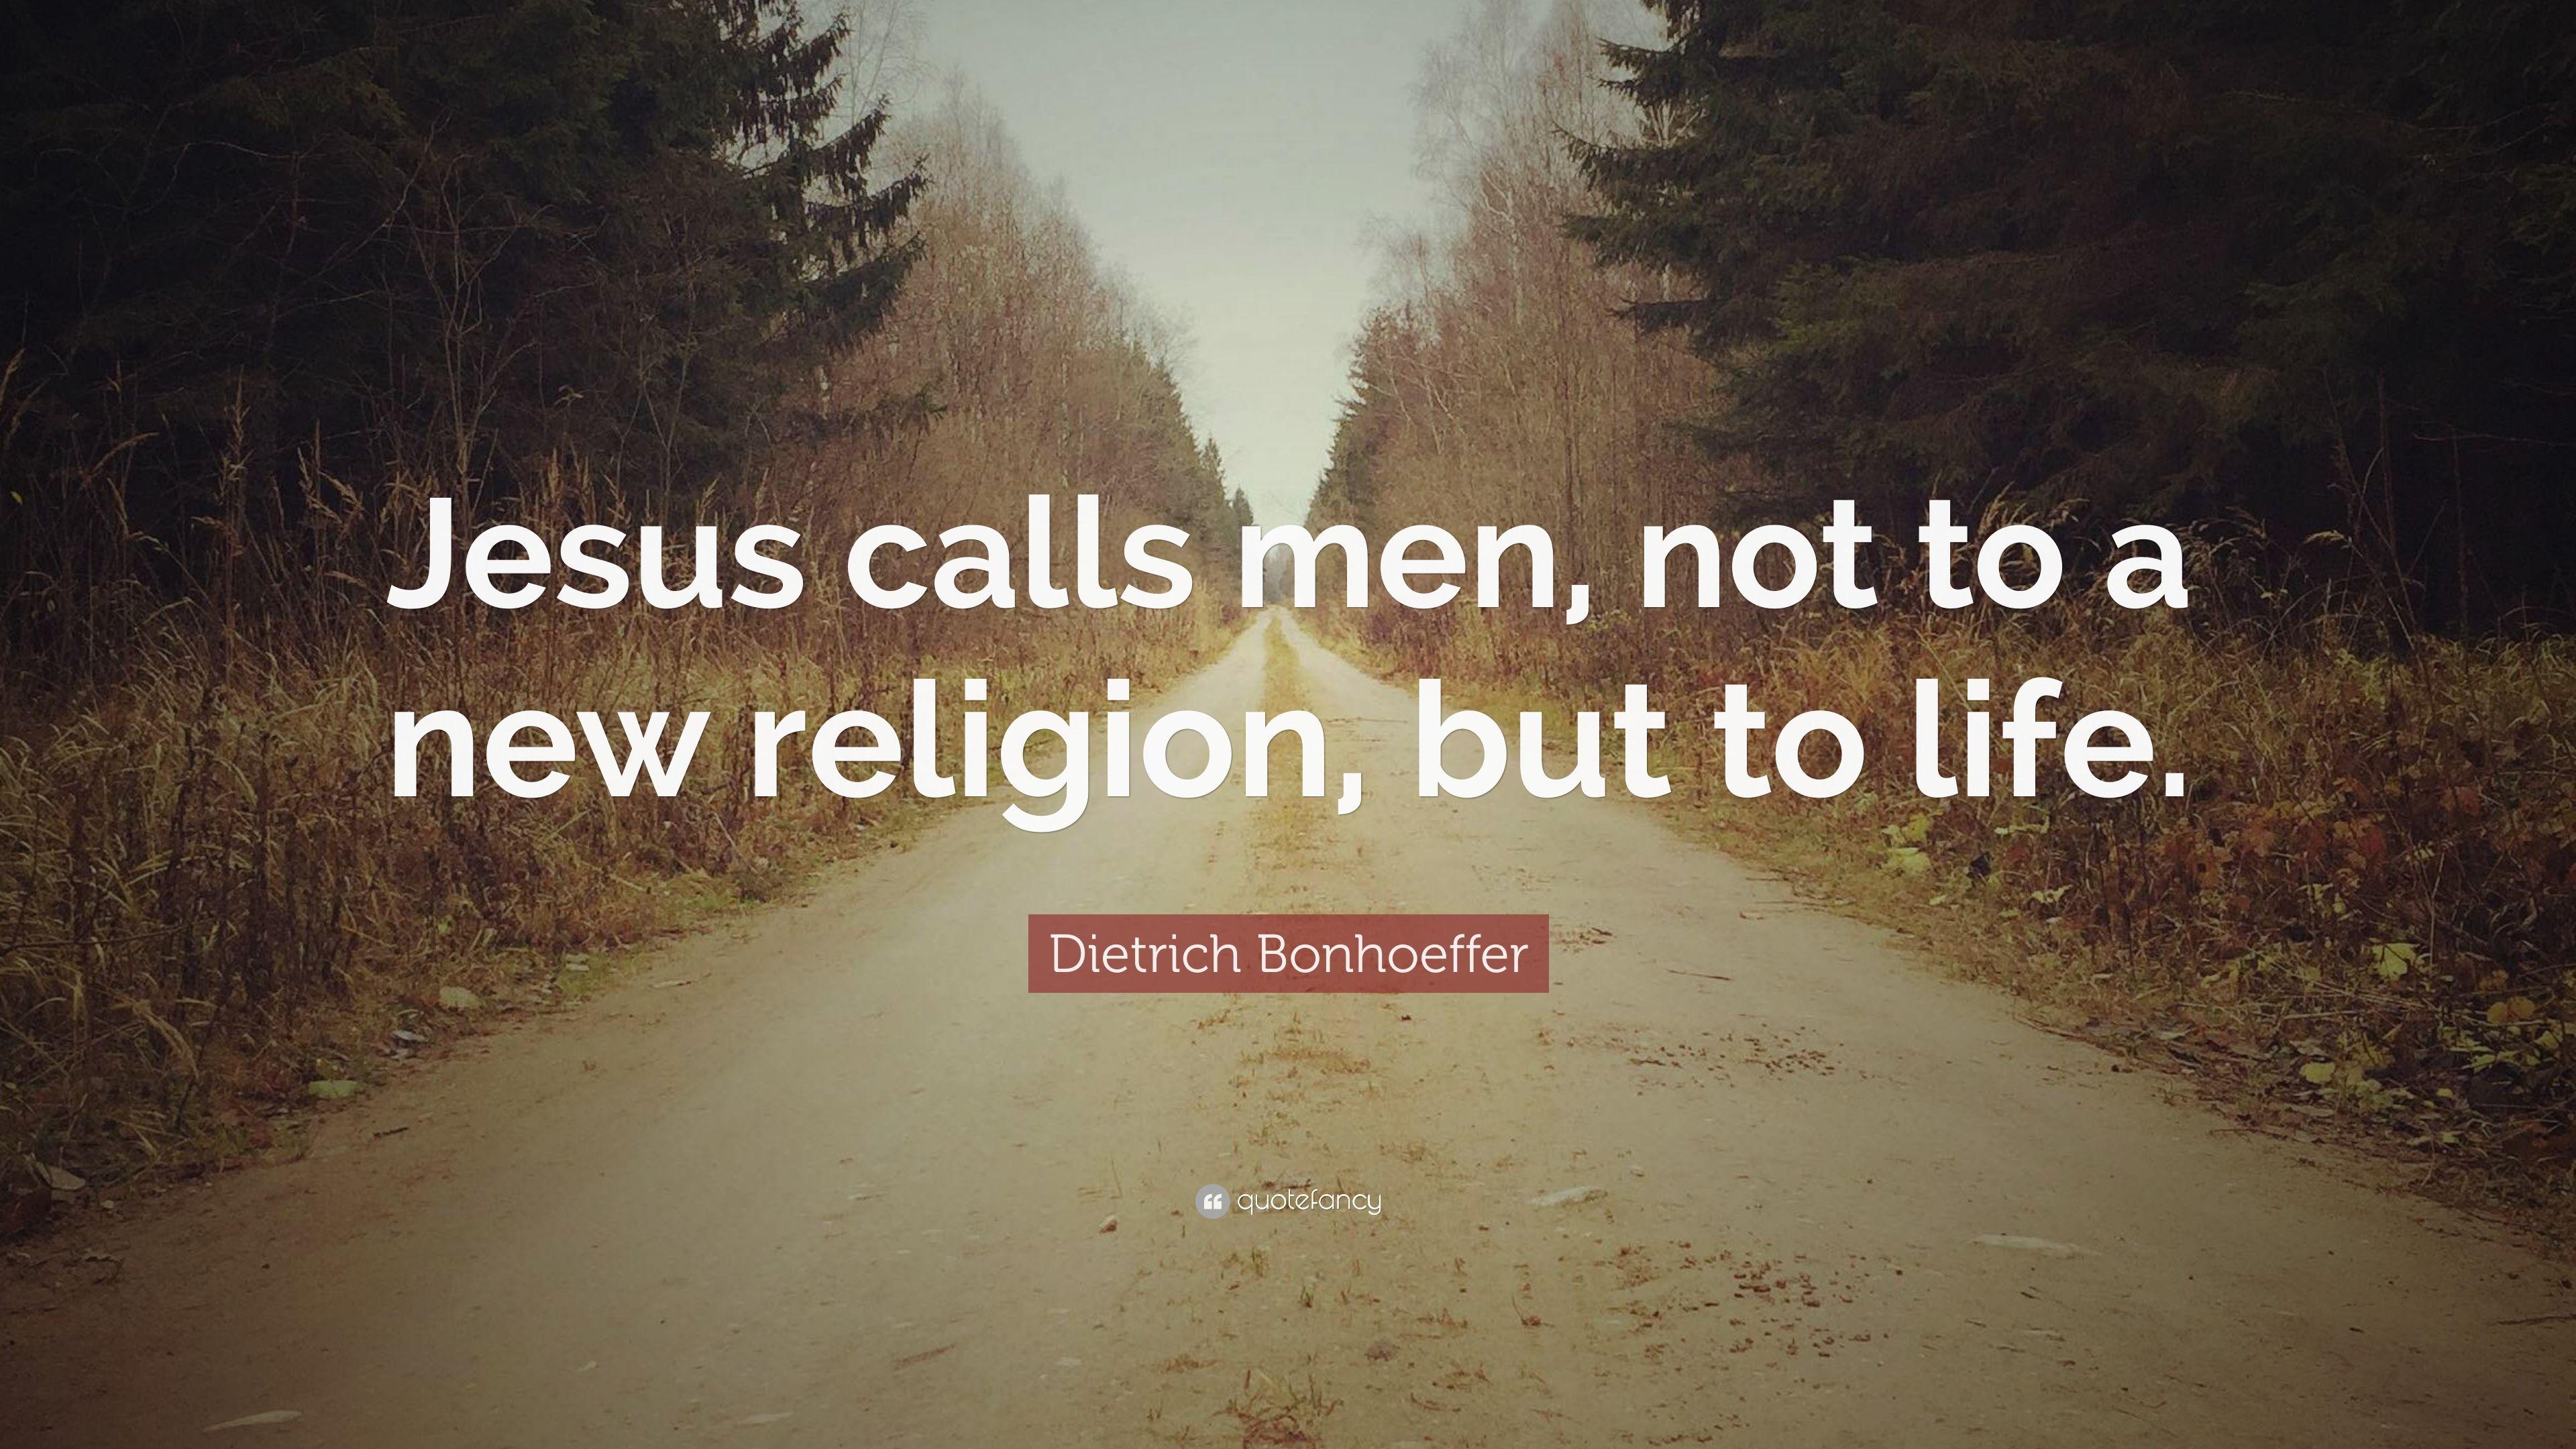 Dietrich Bonhoeffer Quote: “Jesus calls men, not to a new religion